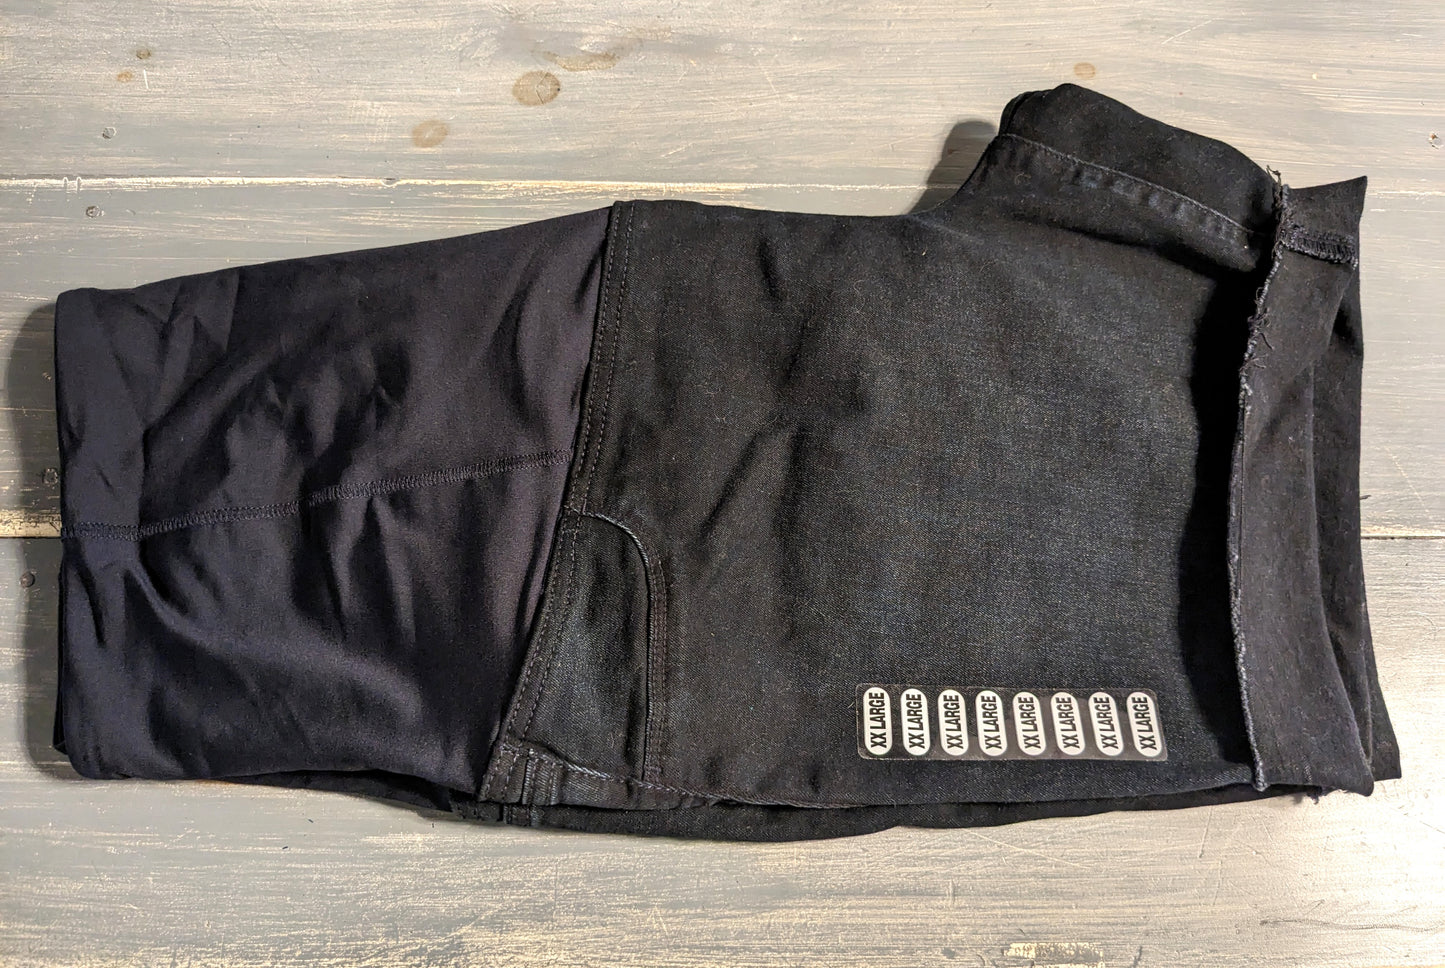 Convertible panel 6.5" rolled raw hem denim shorts, Black wash